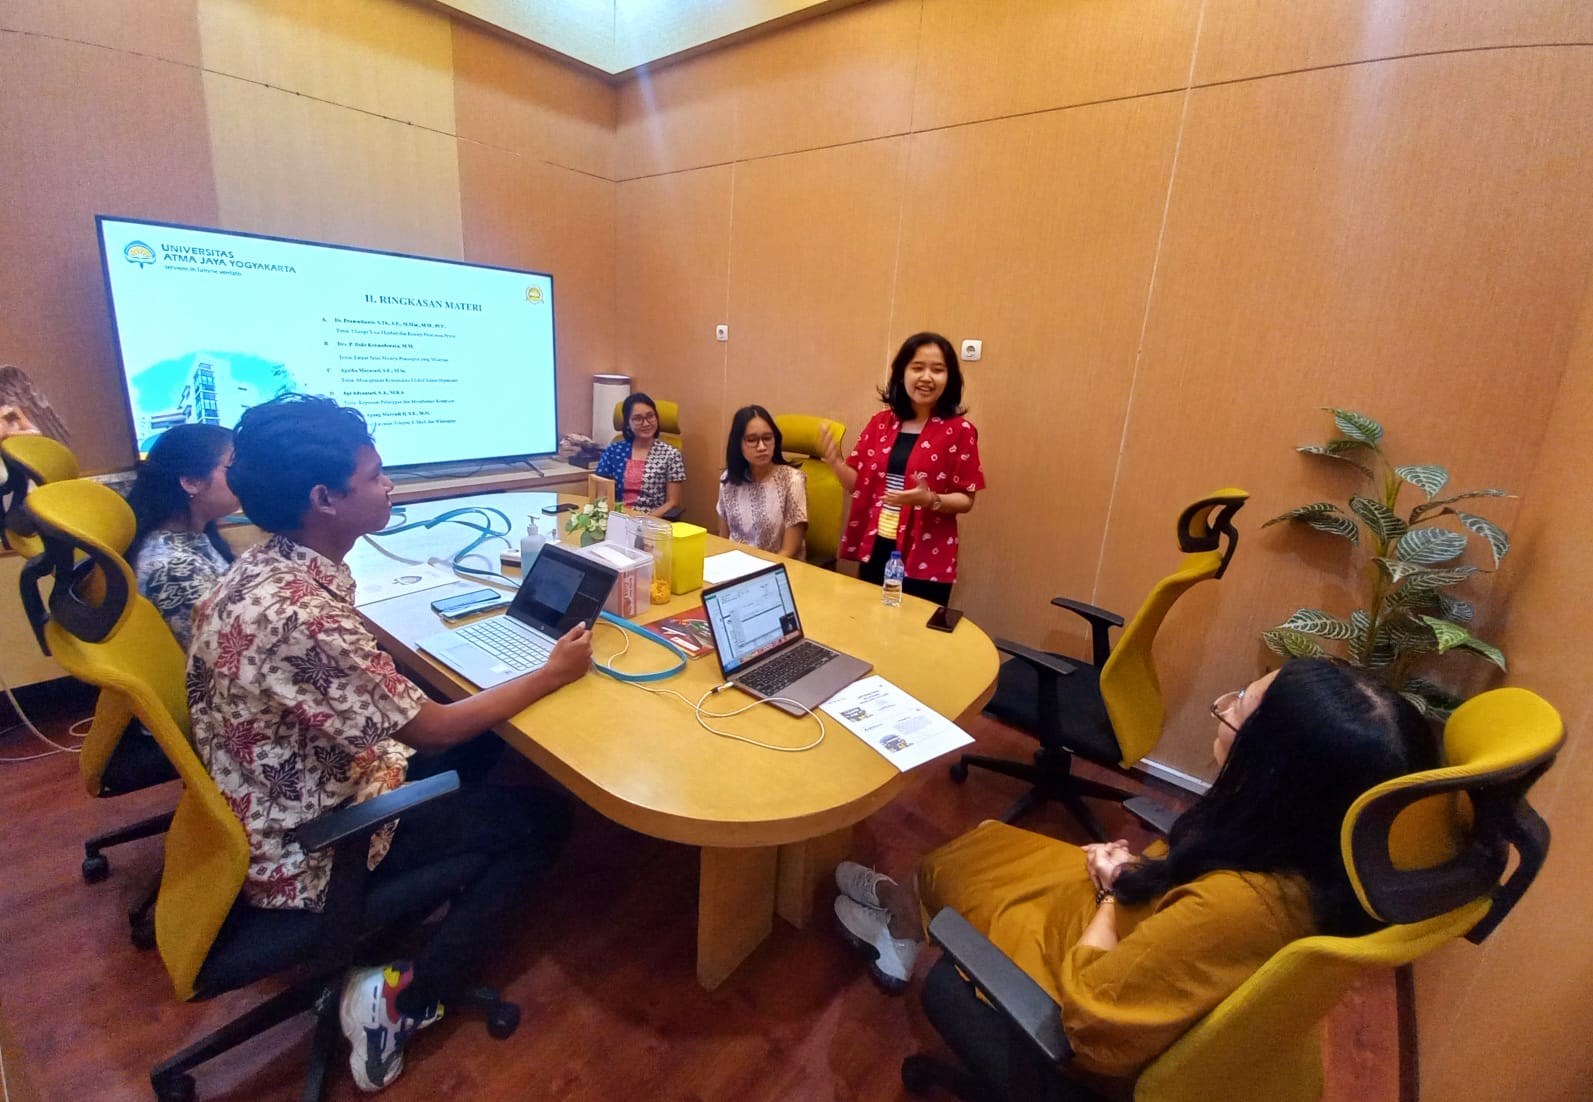 Tingkatkan Kualitas Tenaga Kependidikan, Universitas Atma Jaya Yogyakarta Menyelenggarakan Pelatihan "Service Exellence" Image